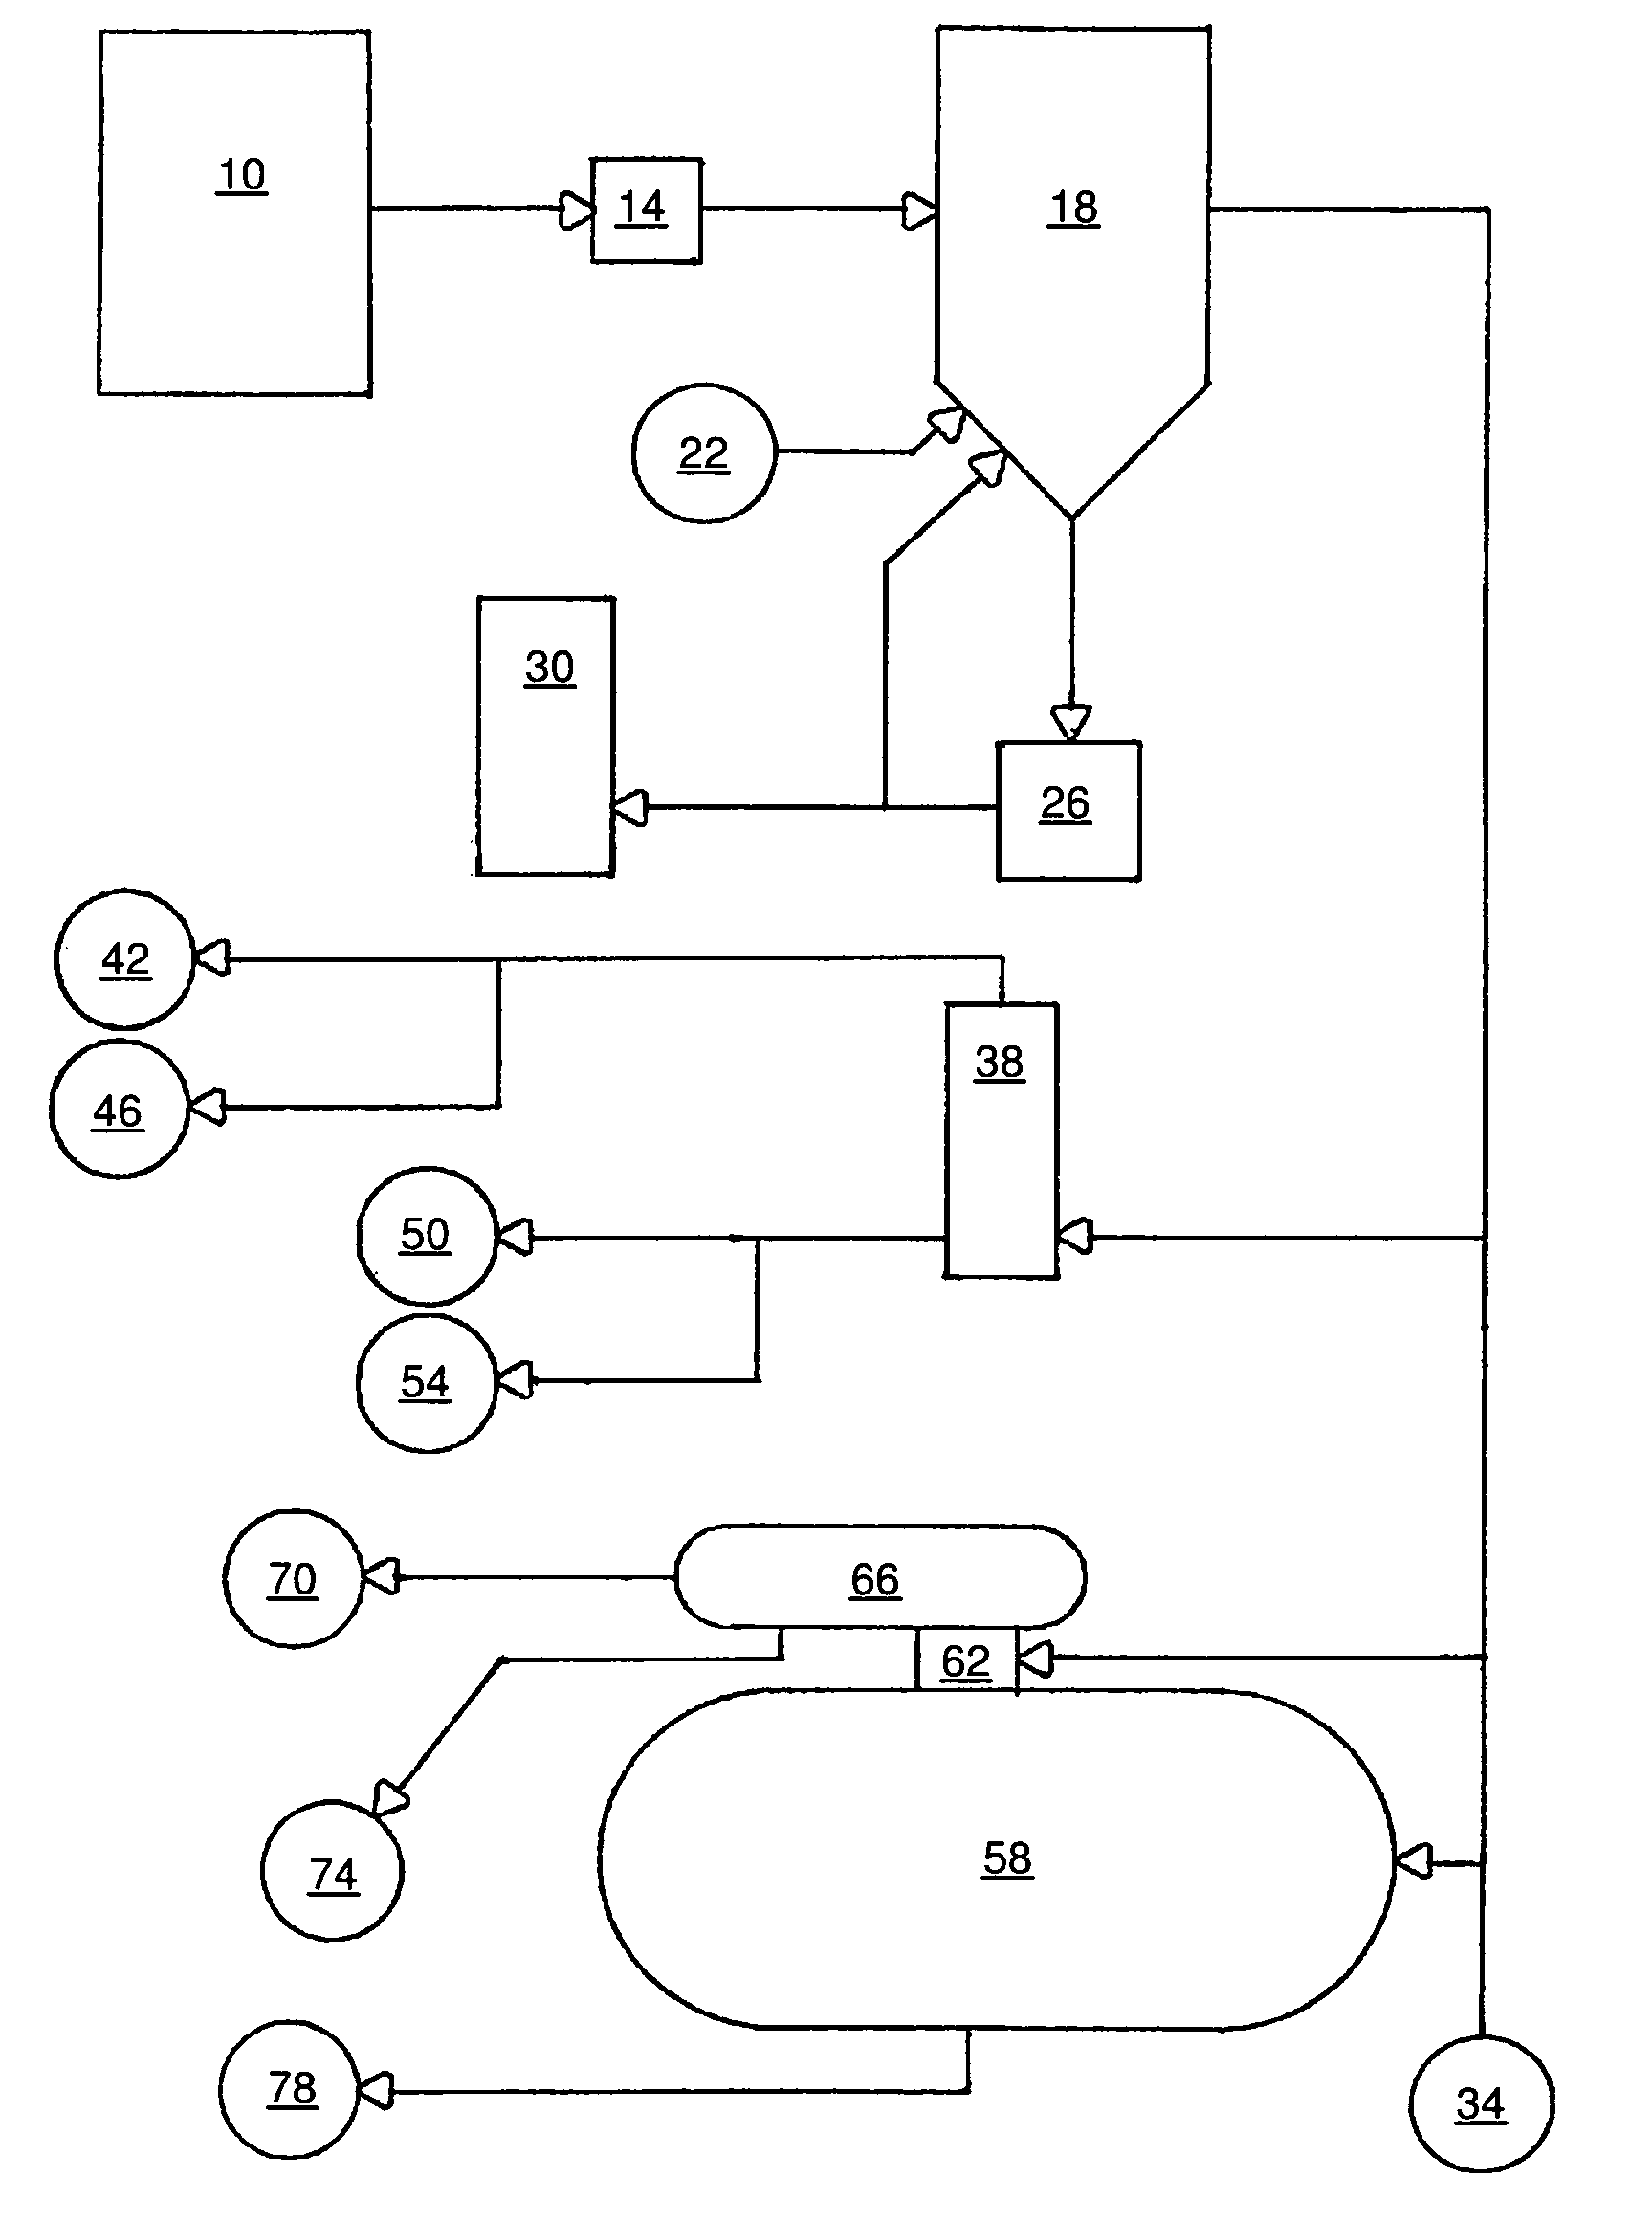 Distillation apparatus and method of use